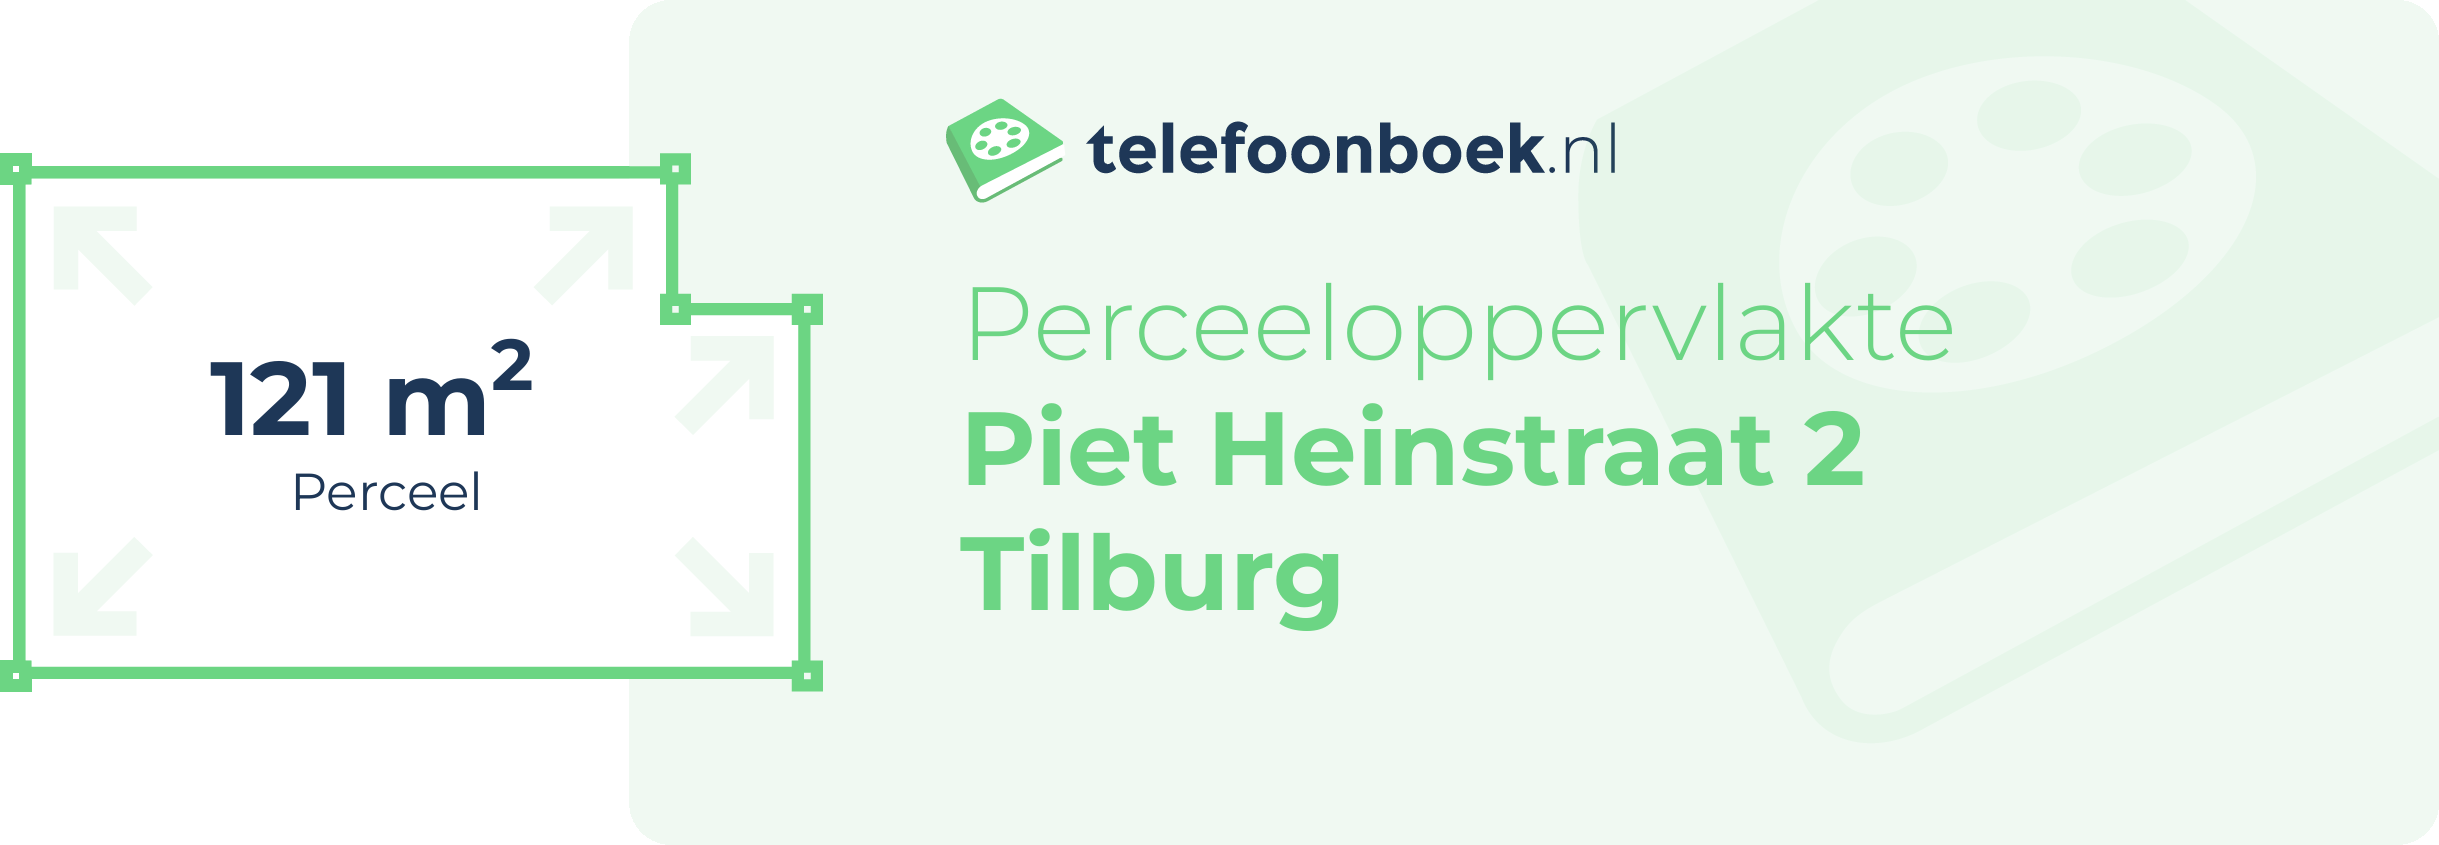 Perceeloppervlakte Piet Heinstraat 2 Tilburg